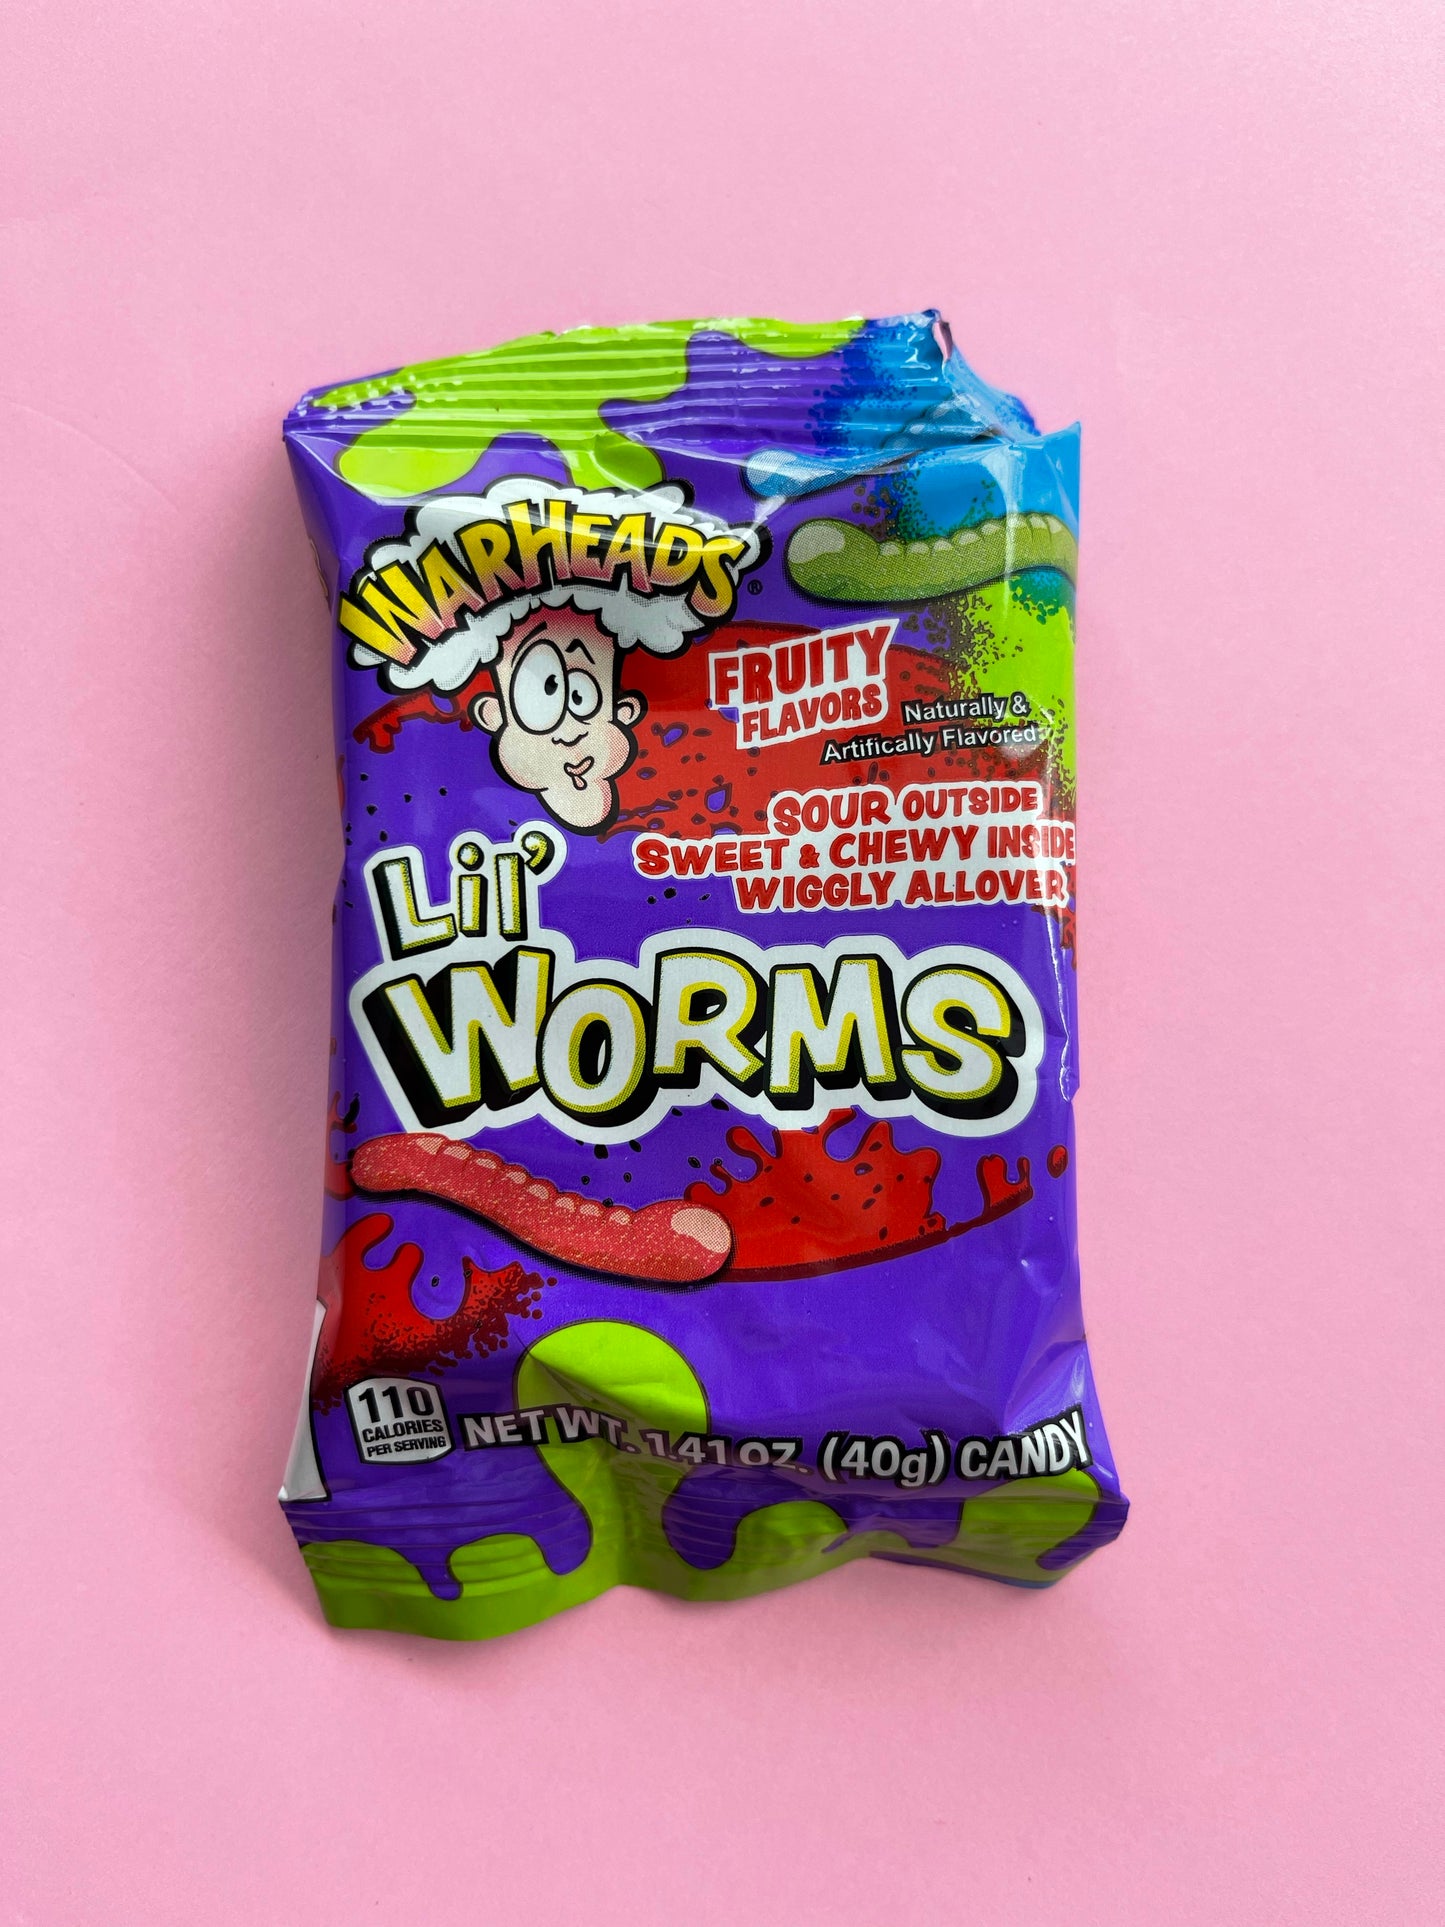 Warheads Lil’ Worms